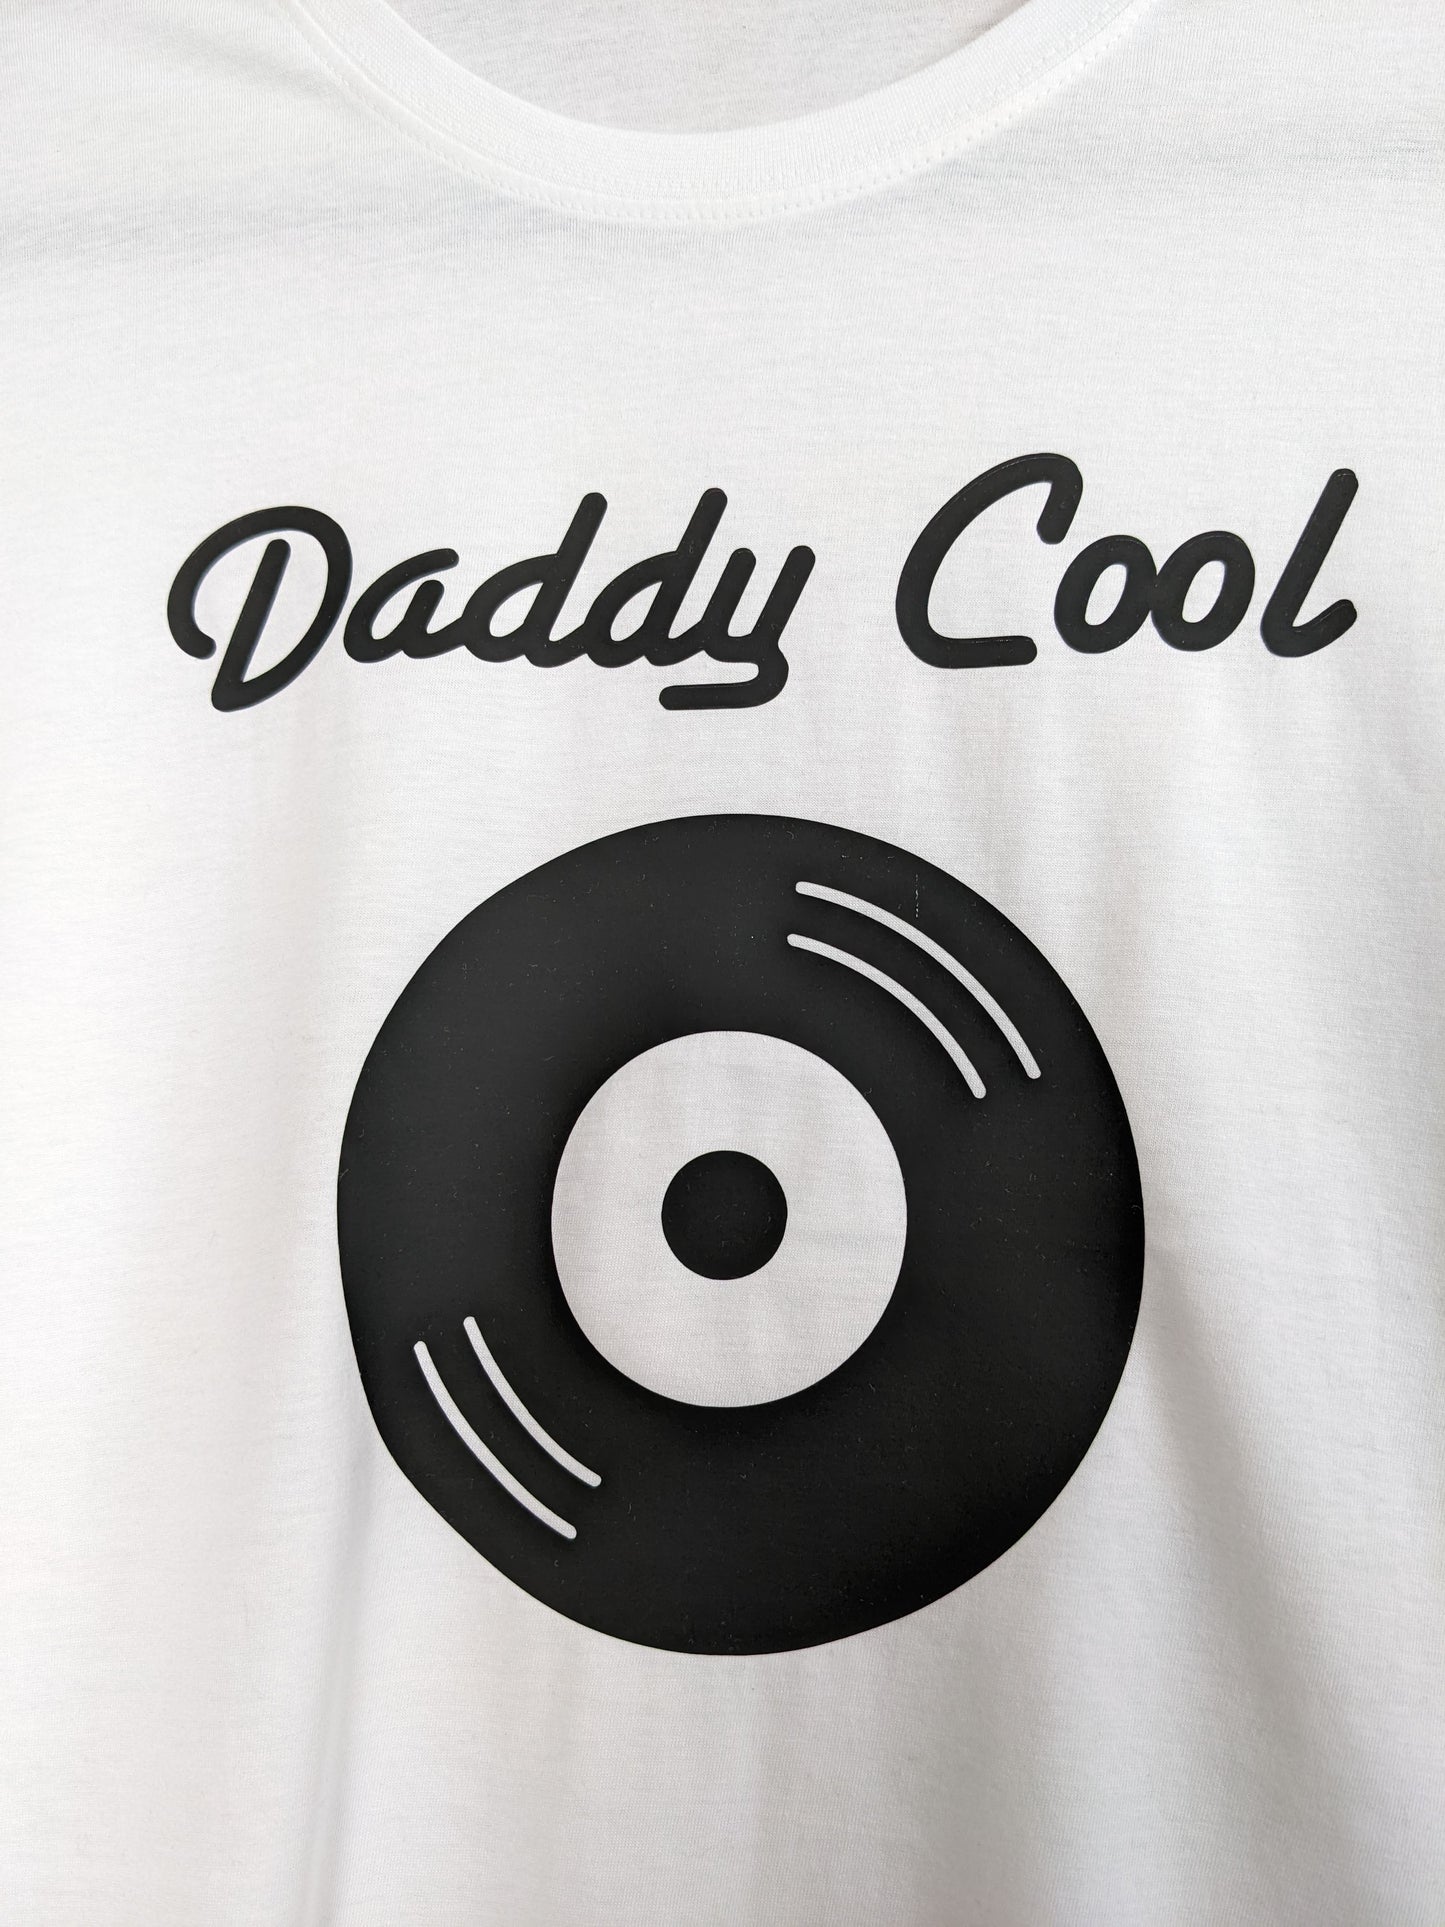 Daddy Cool Record Tee